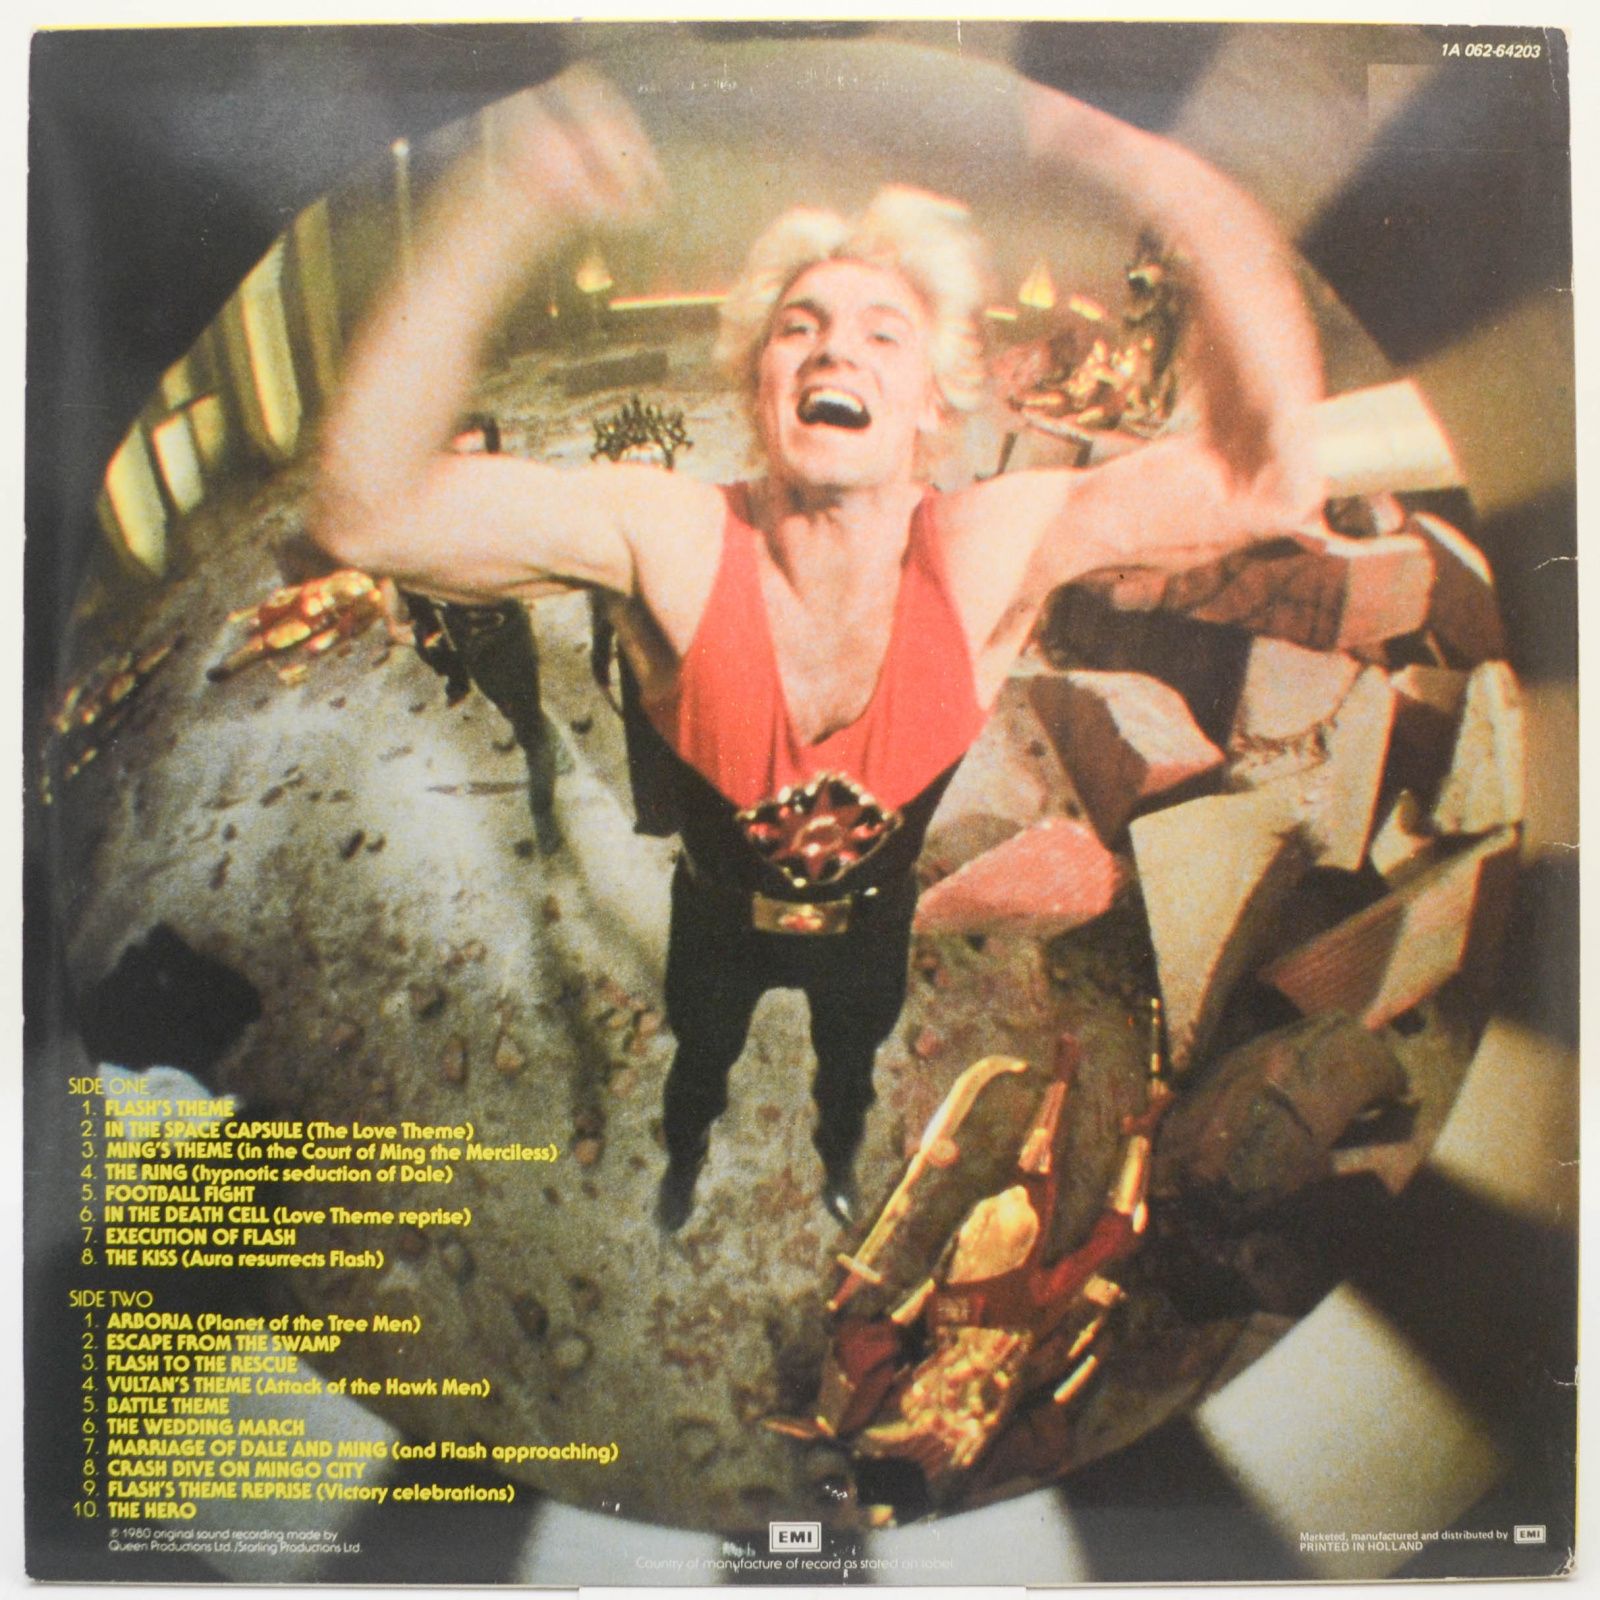 Queen — Flash Gordon (Original Soundtrack Music), 1980